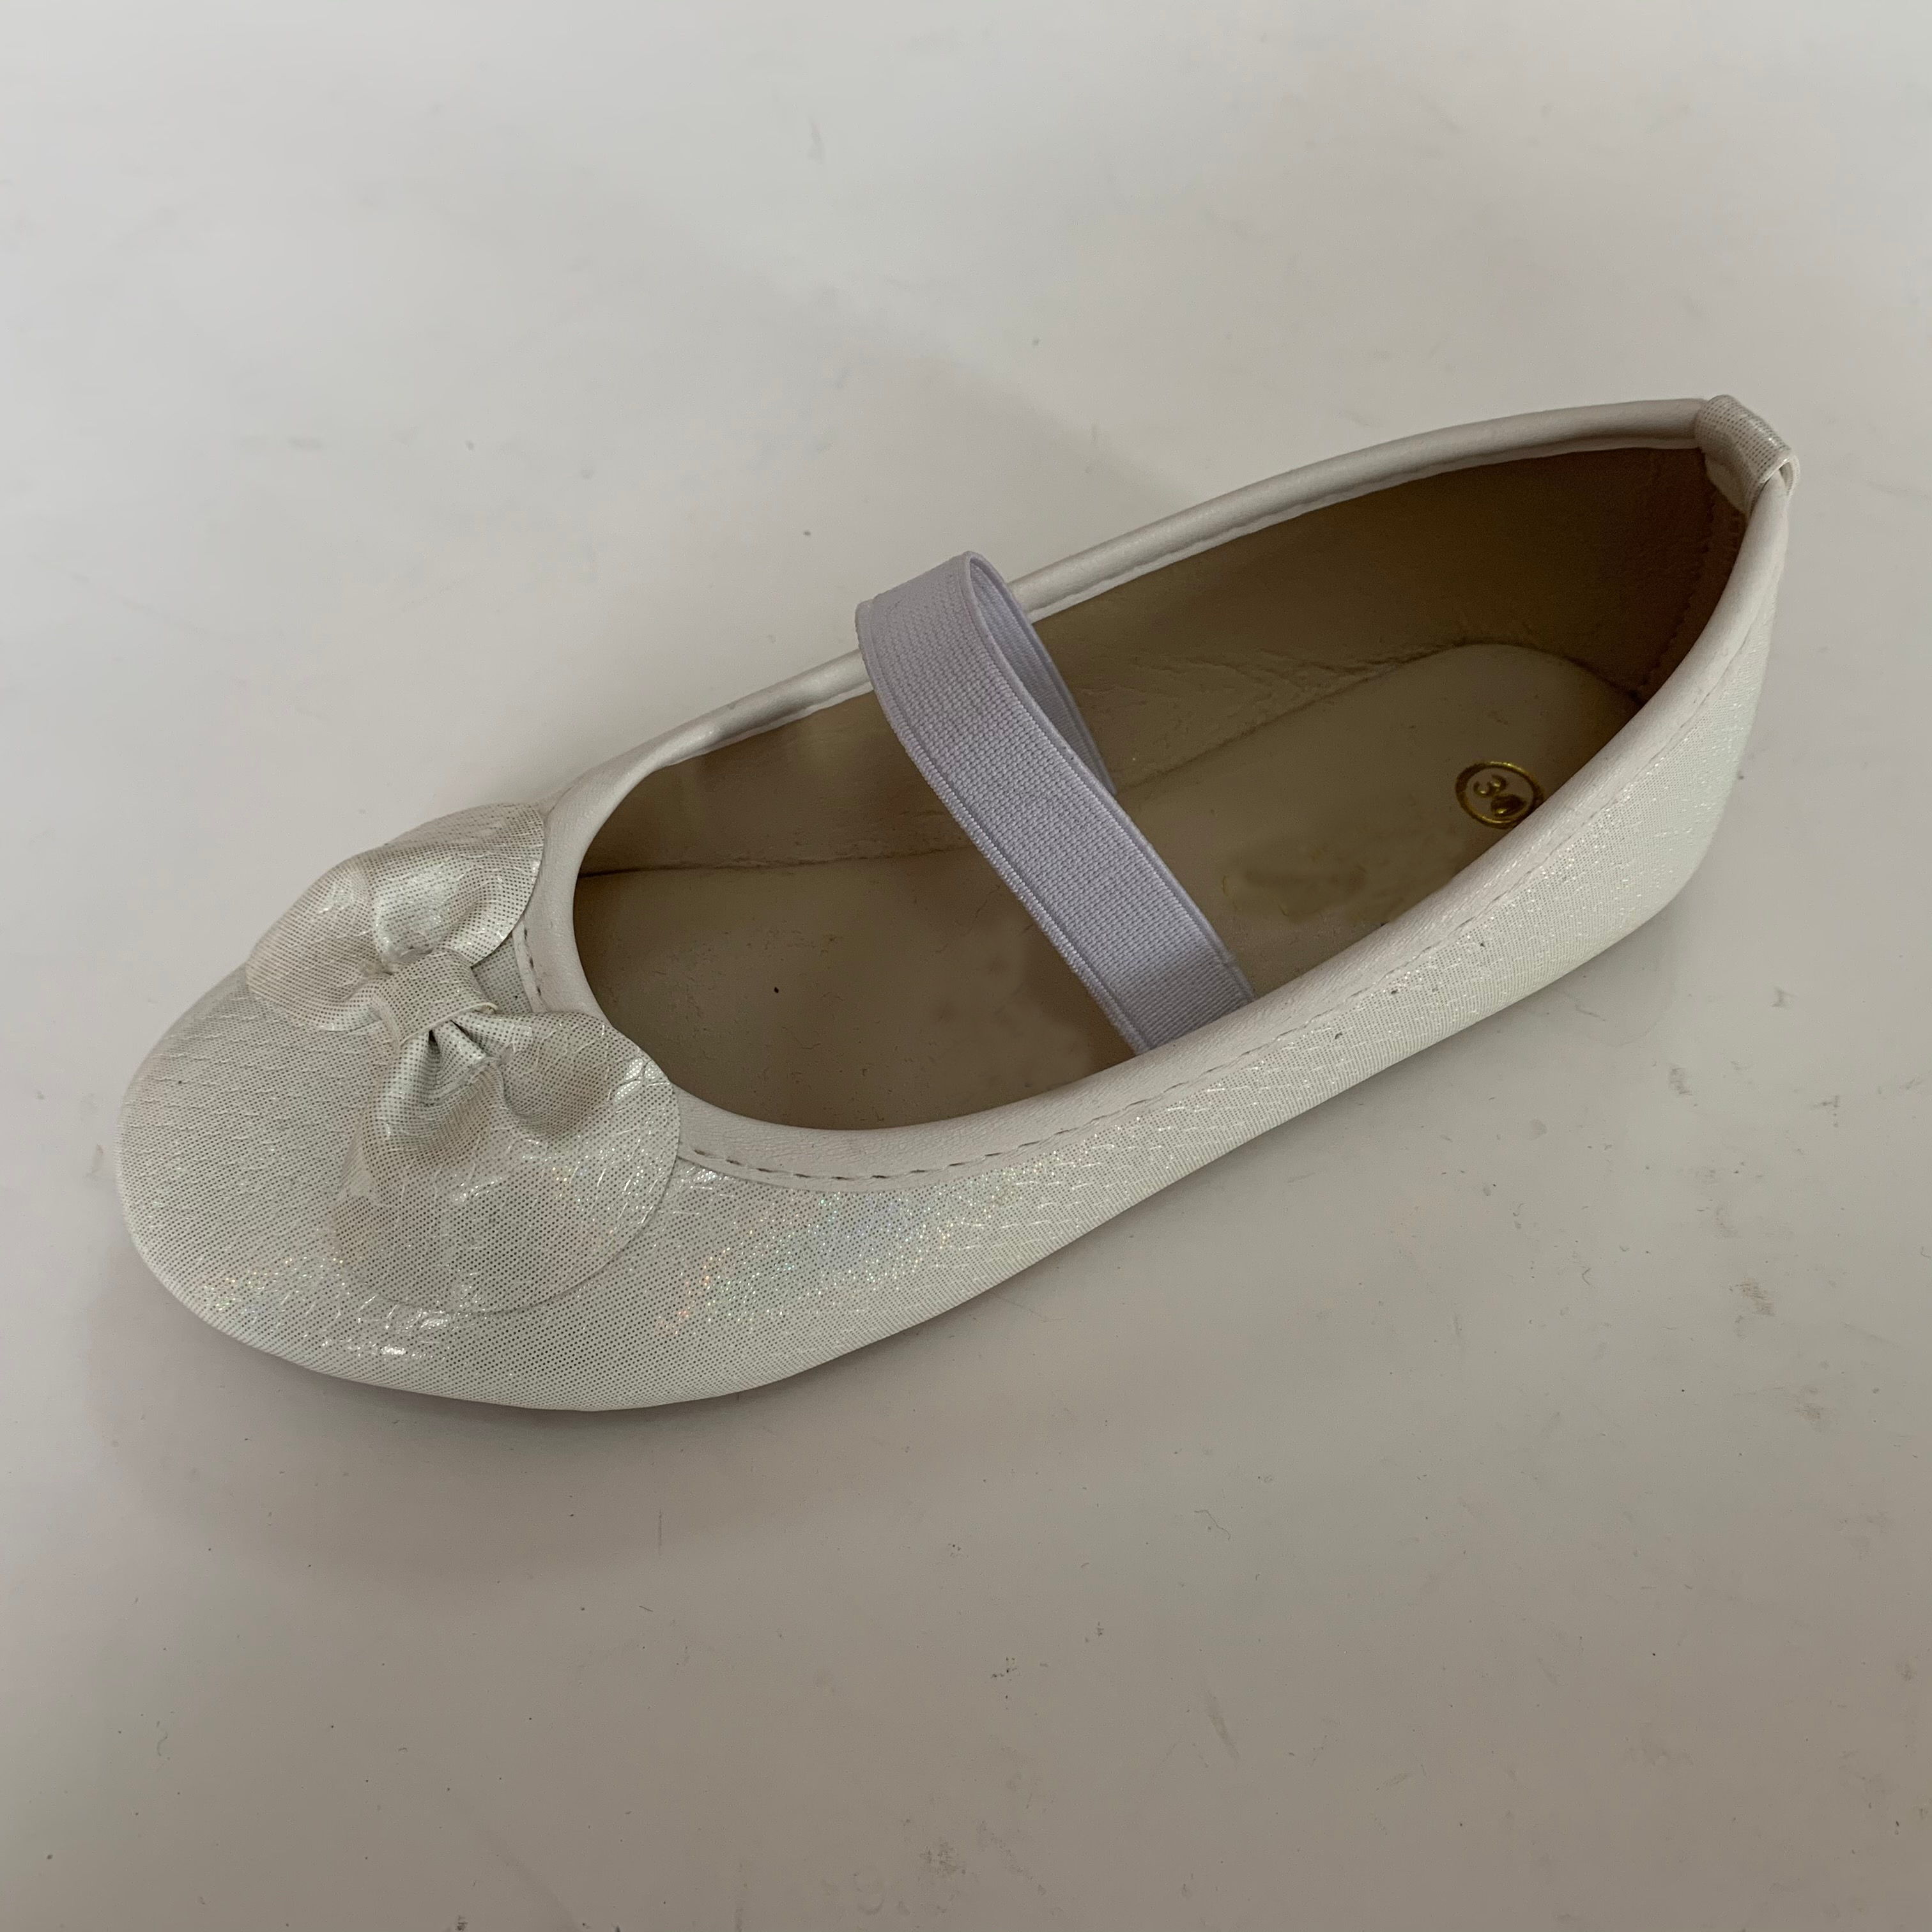  Children's Gilrs' Ballet Flats White Slip On Shoes